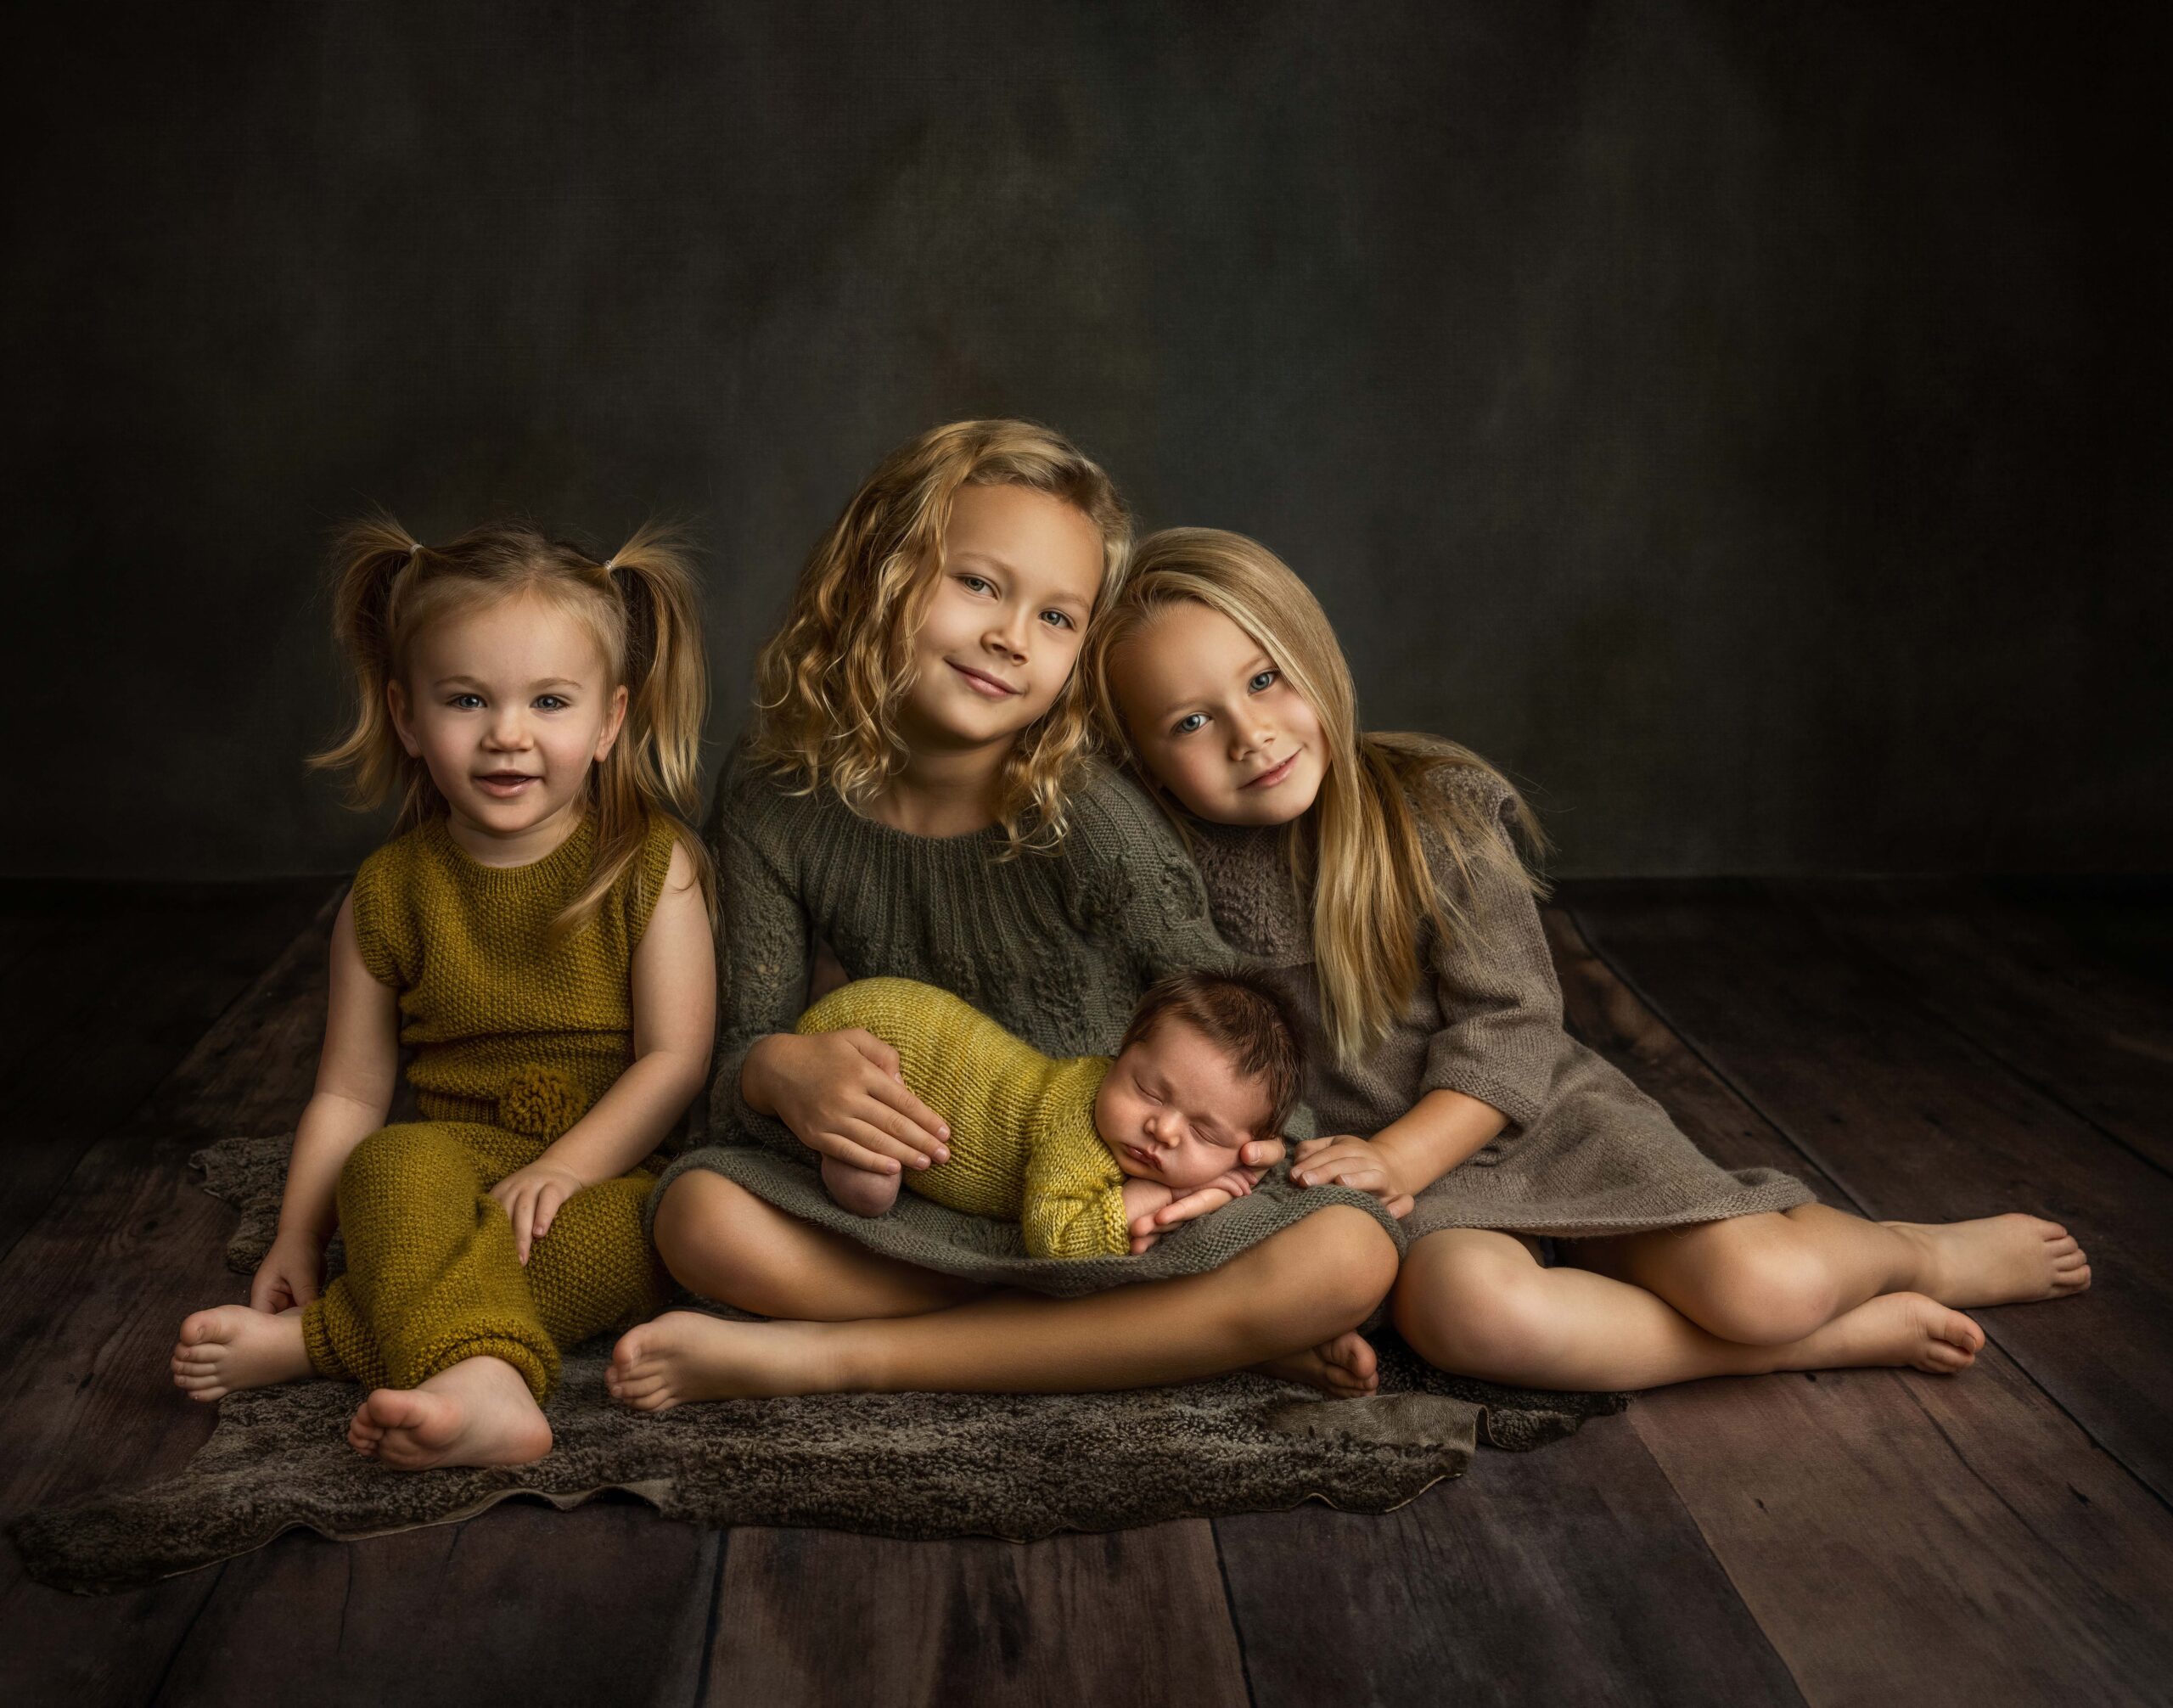 newborn boy with sisters beautiful portrait